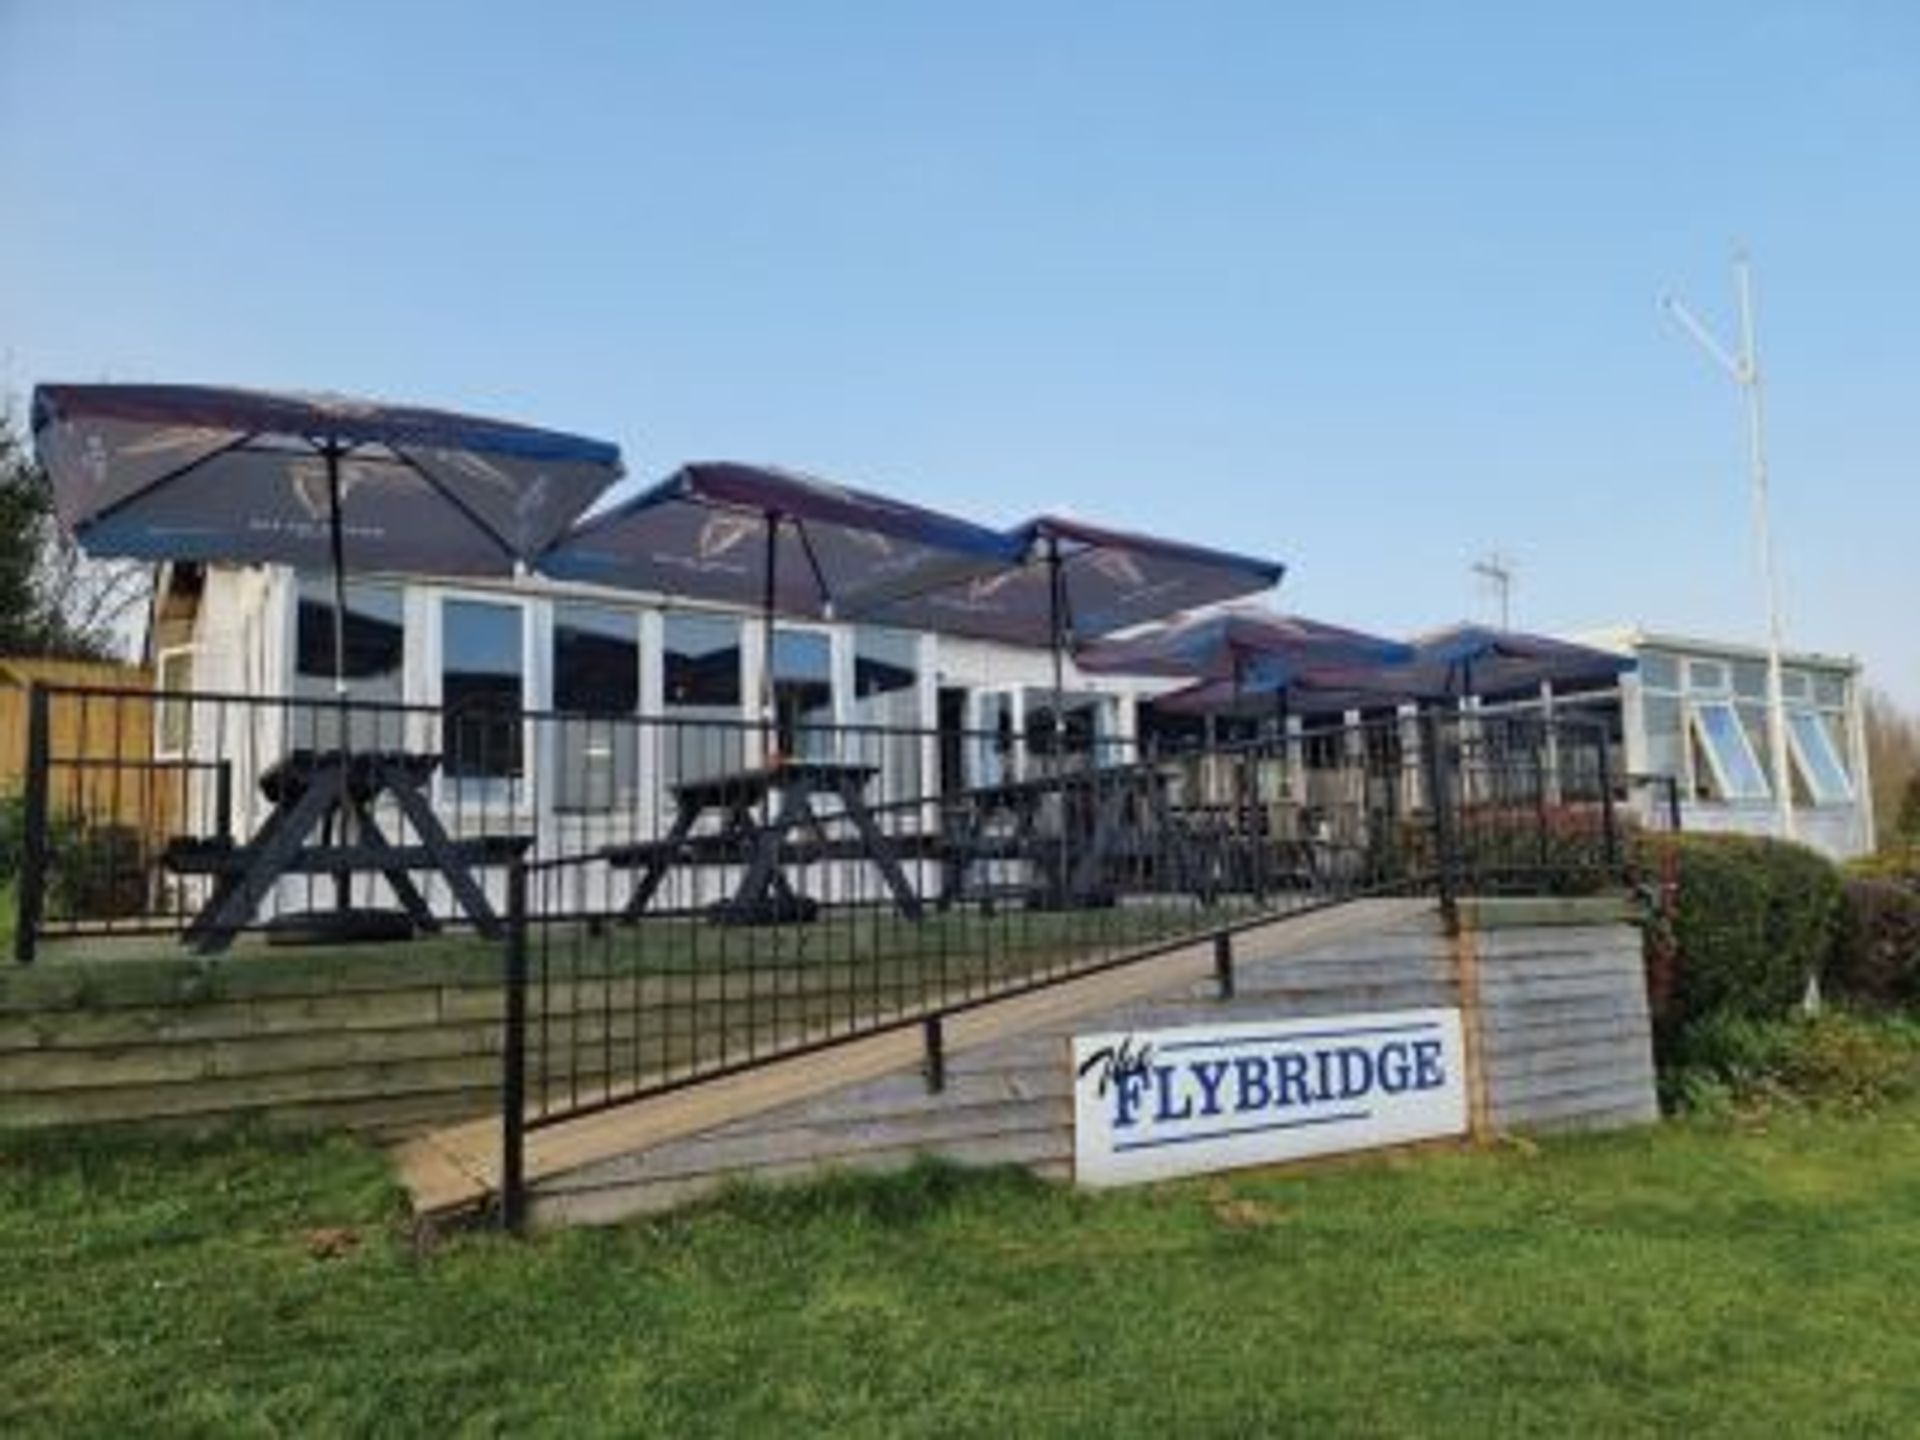 Flybridge at Defford Marina